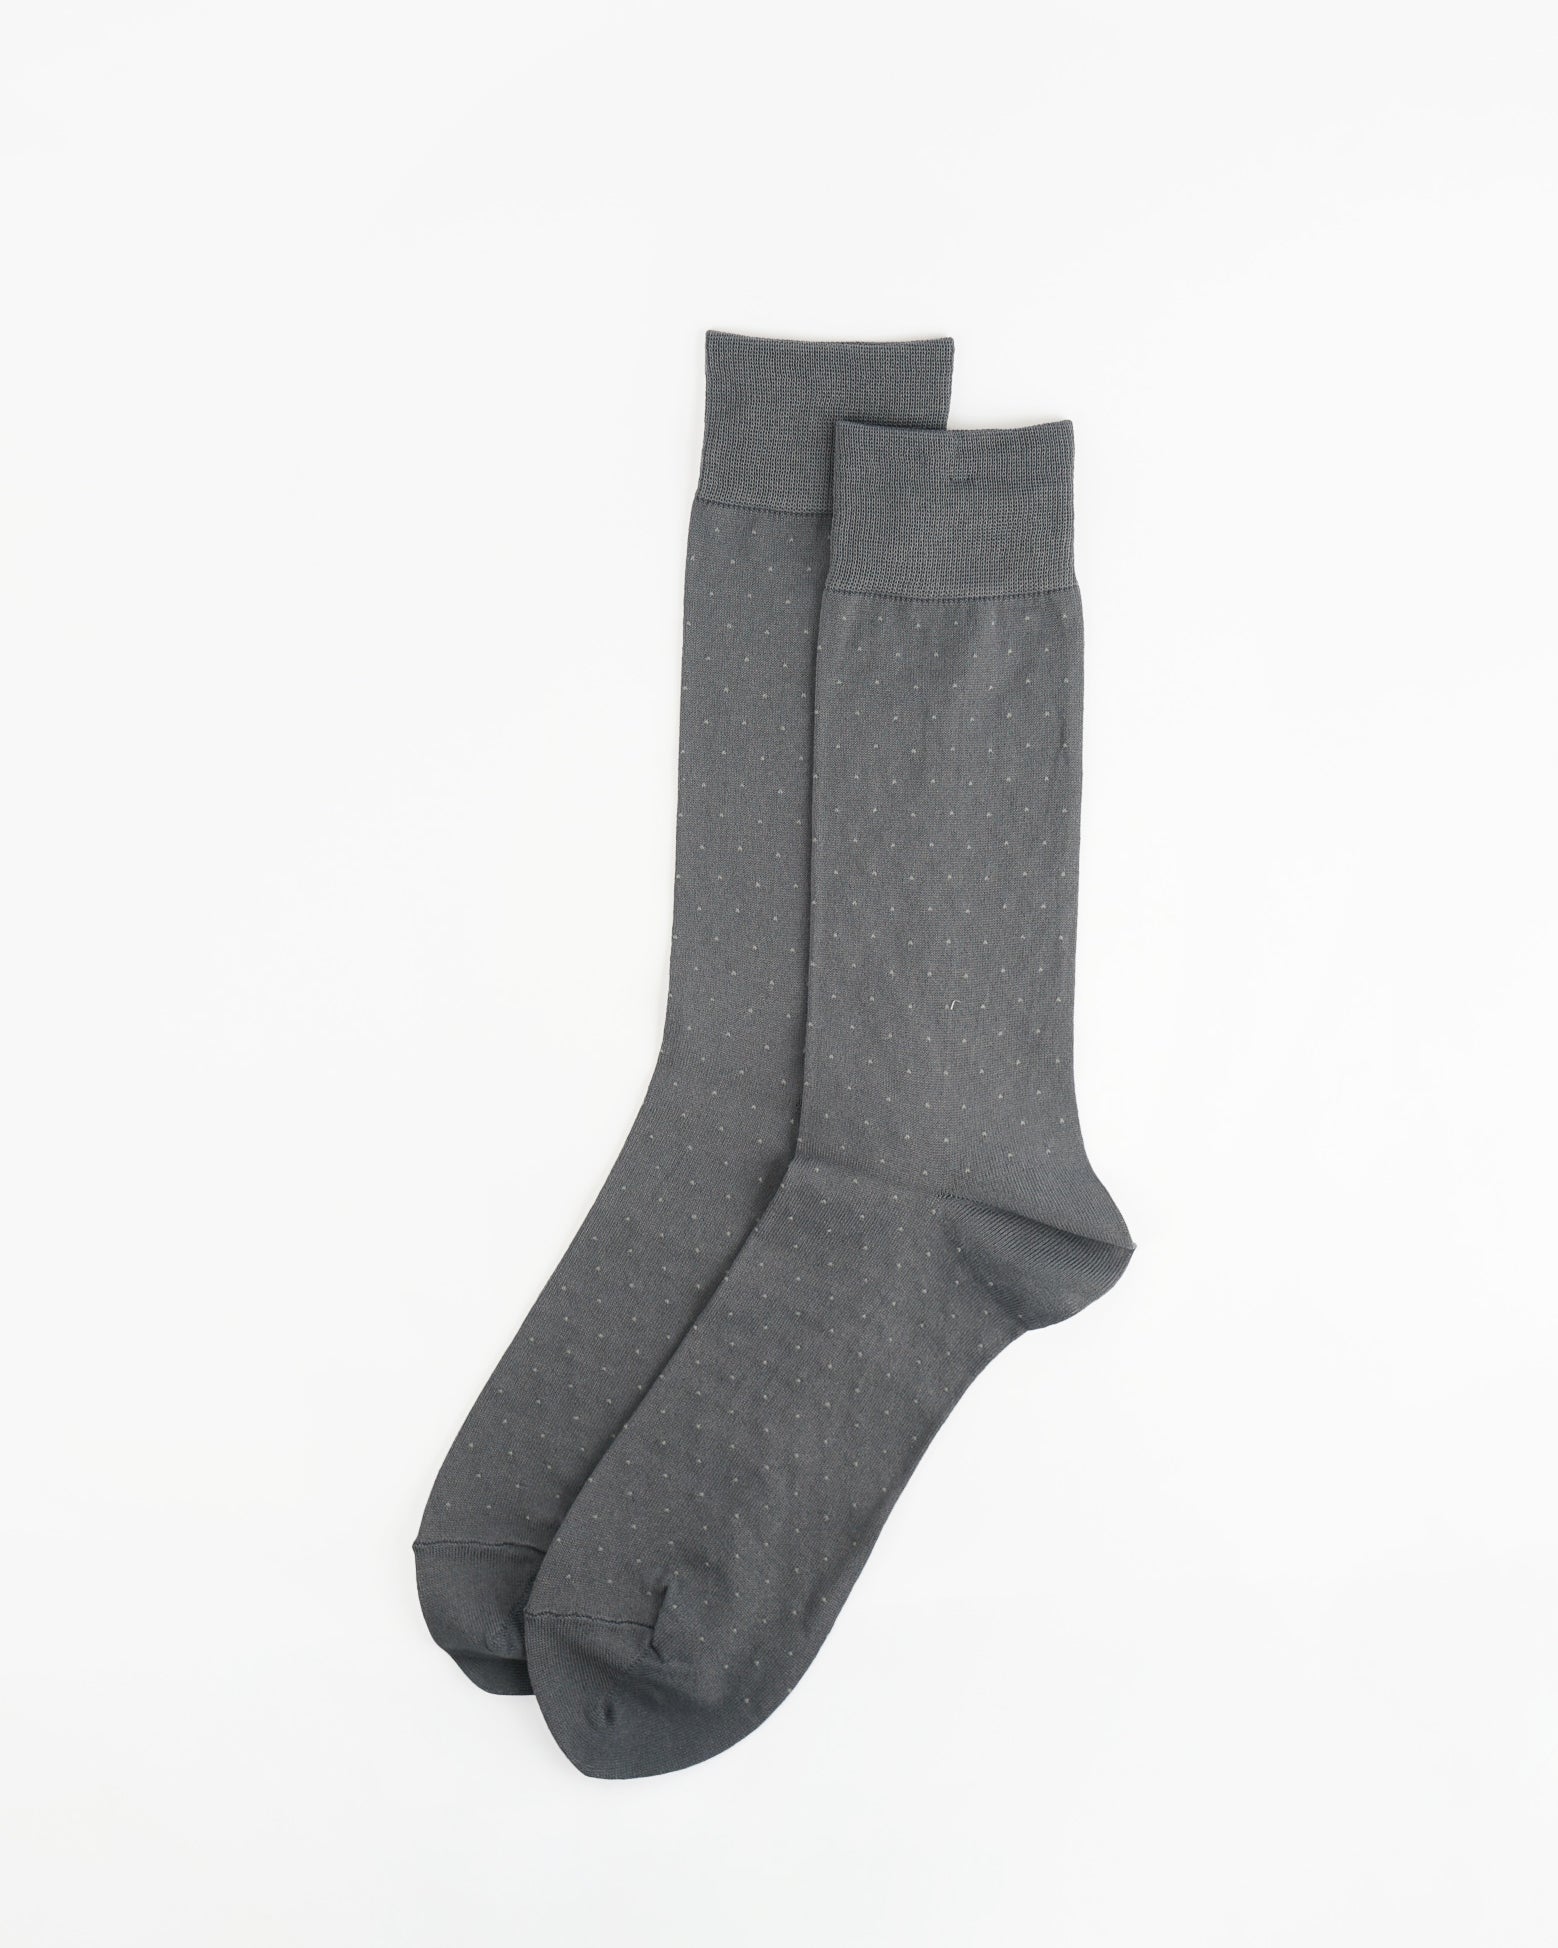 Polka Dot Dress Socks Set / Gray Black Navy